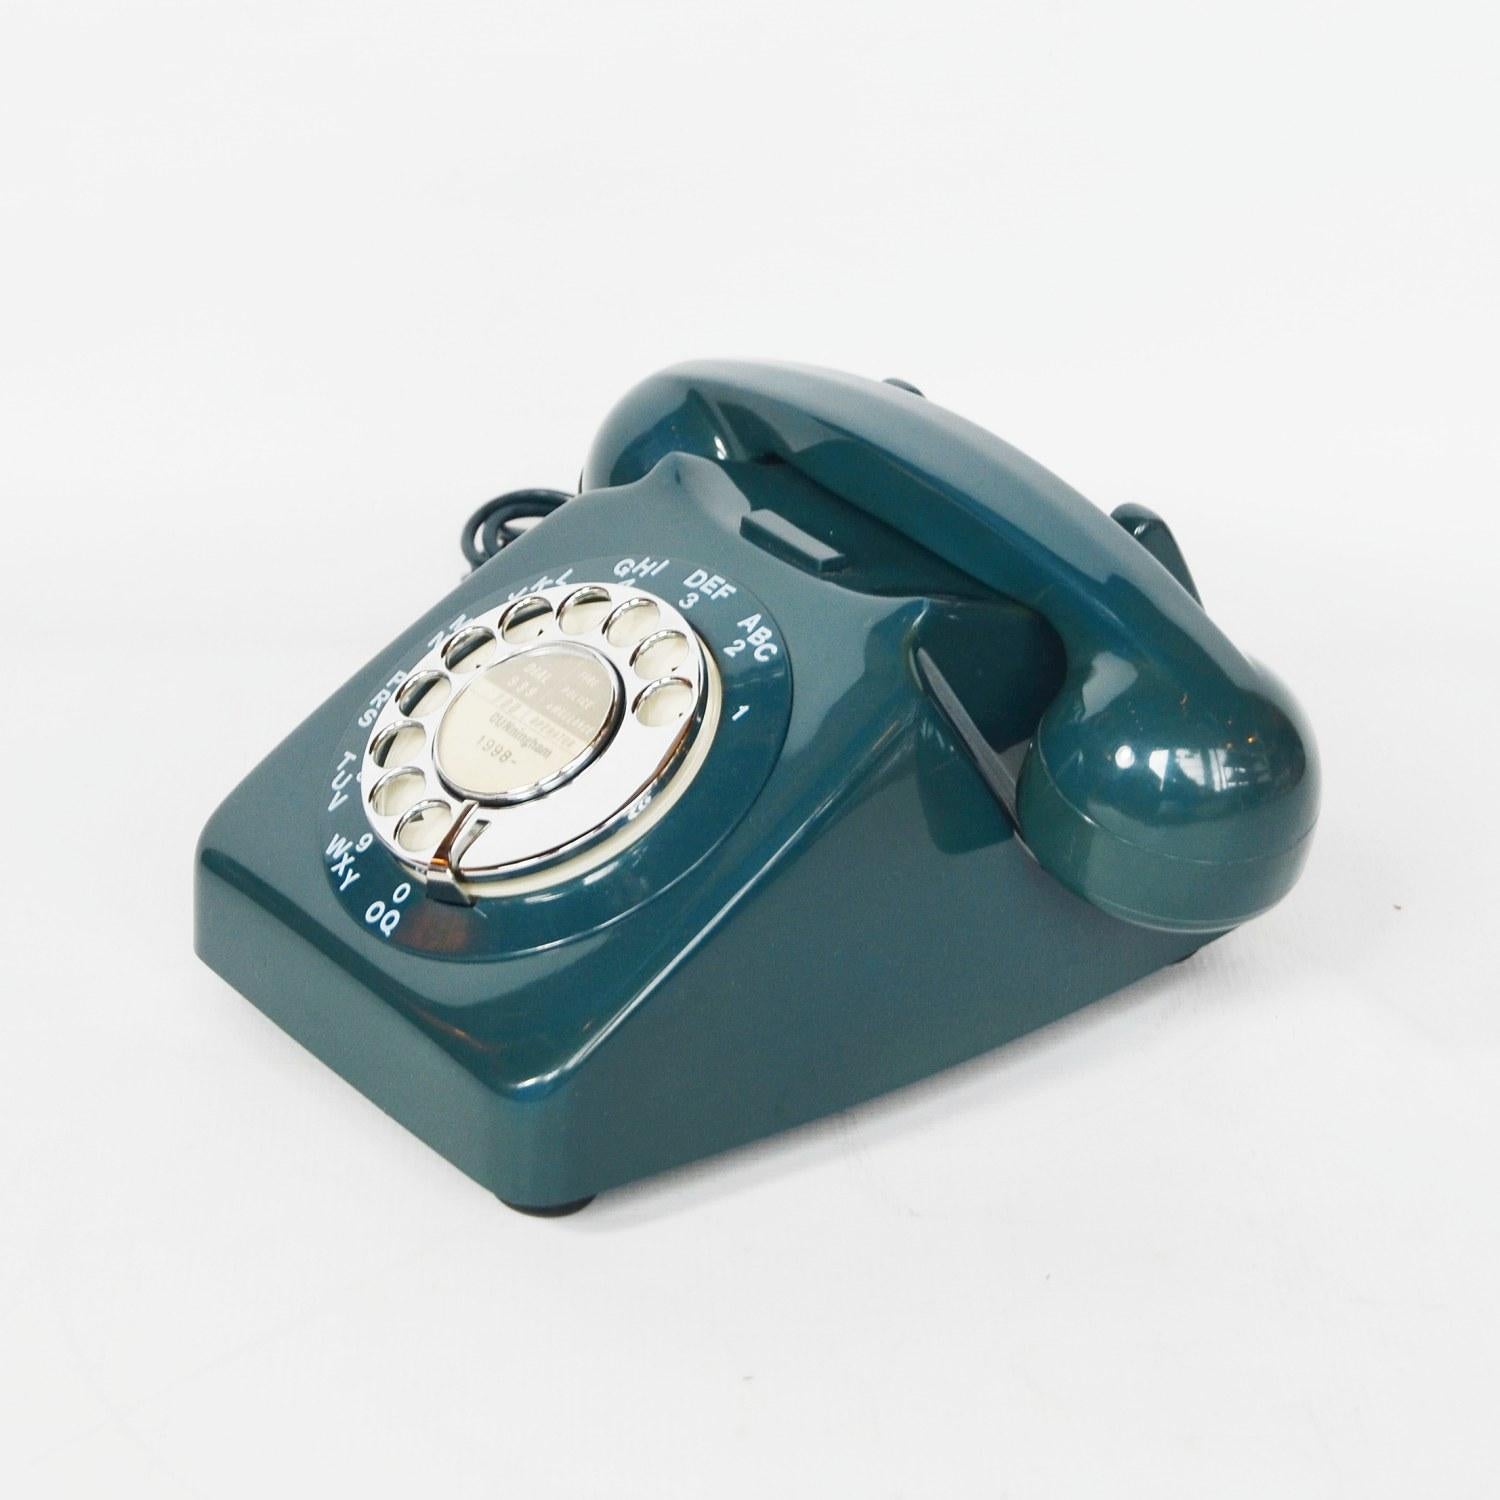 Plastic Original 1970s Model 746L Telephone Full Working Order